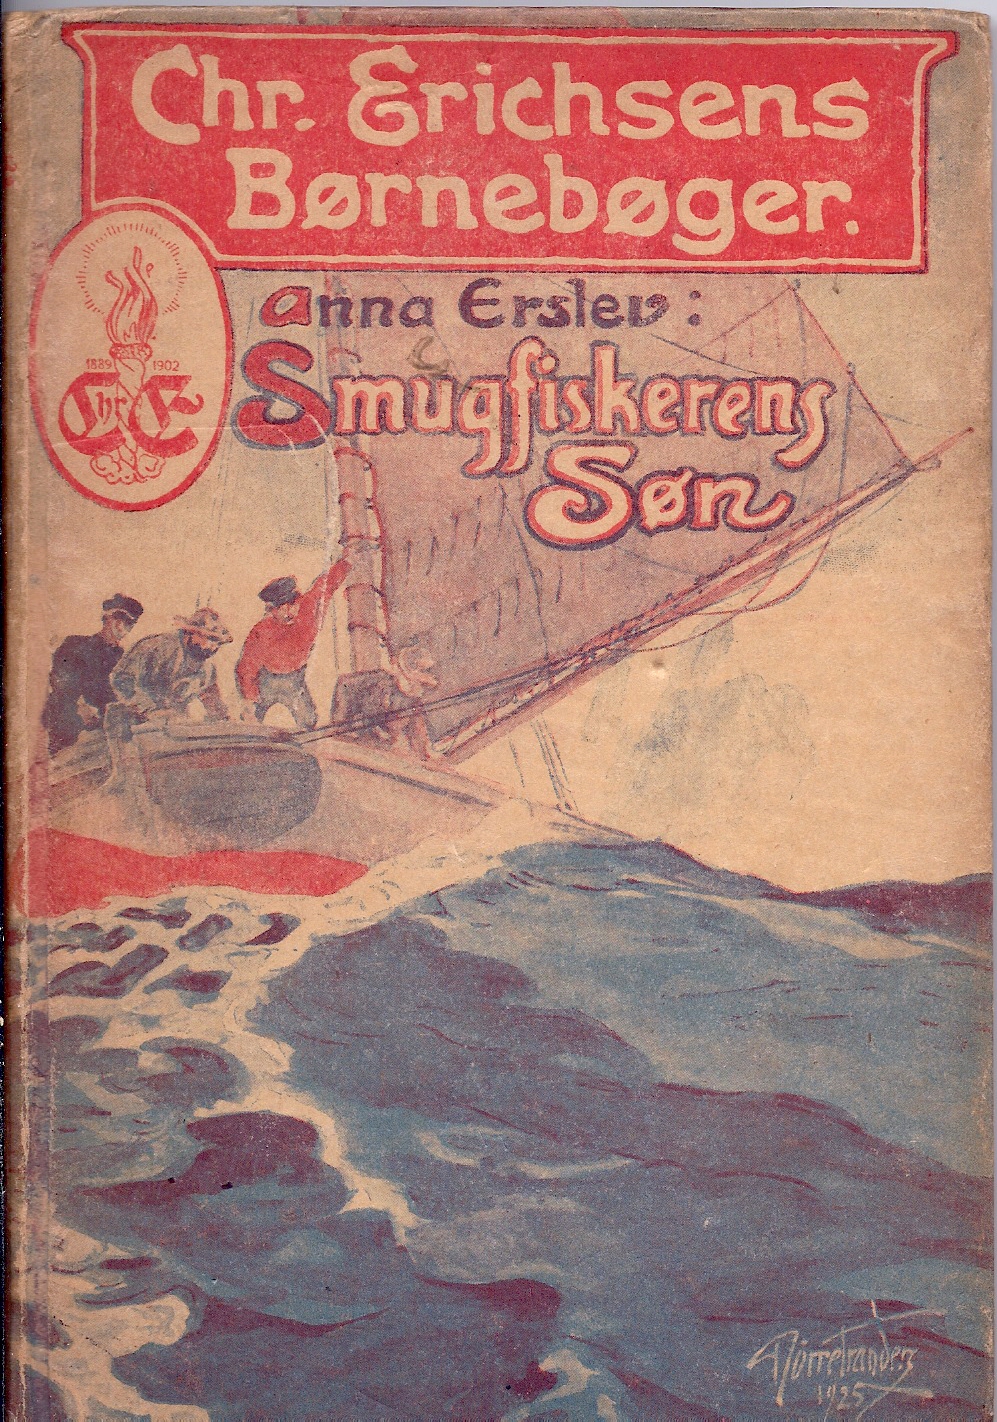 Smugfiskerens Søn - Anna Erslev